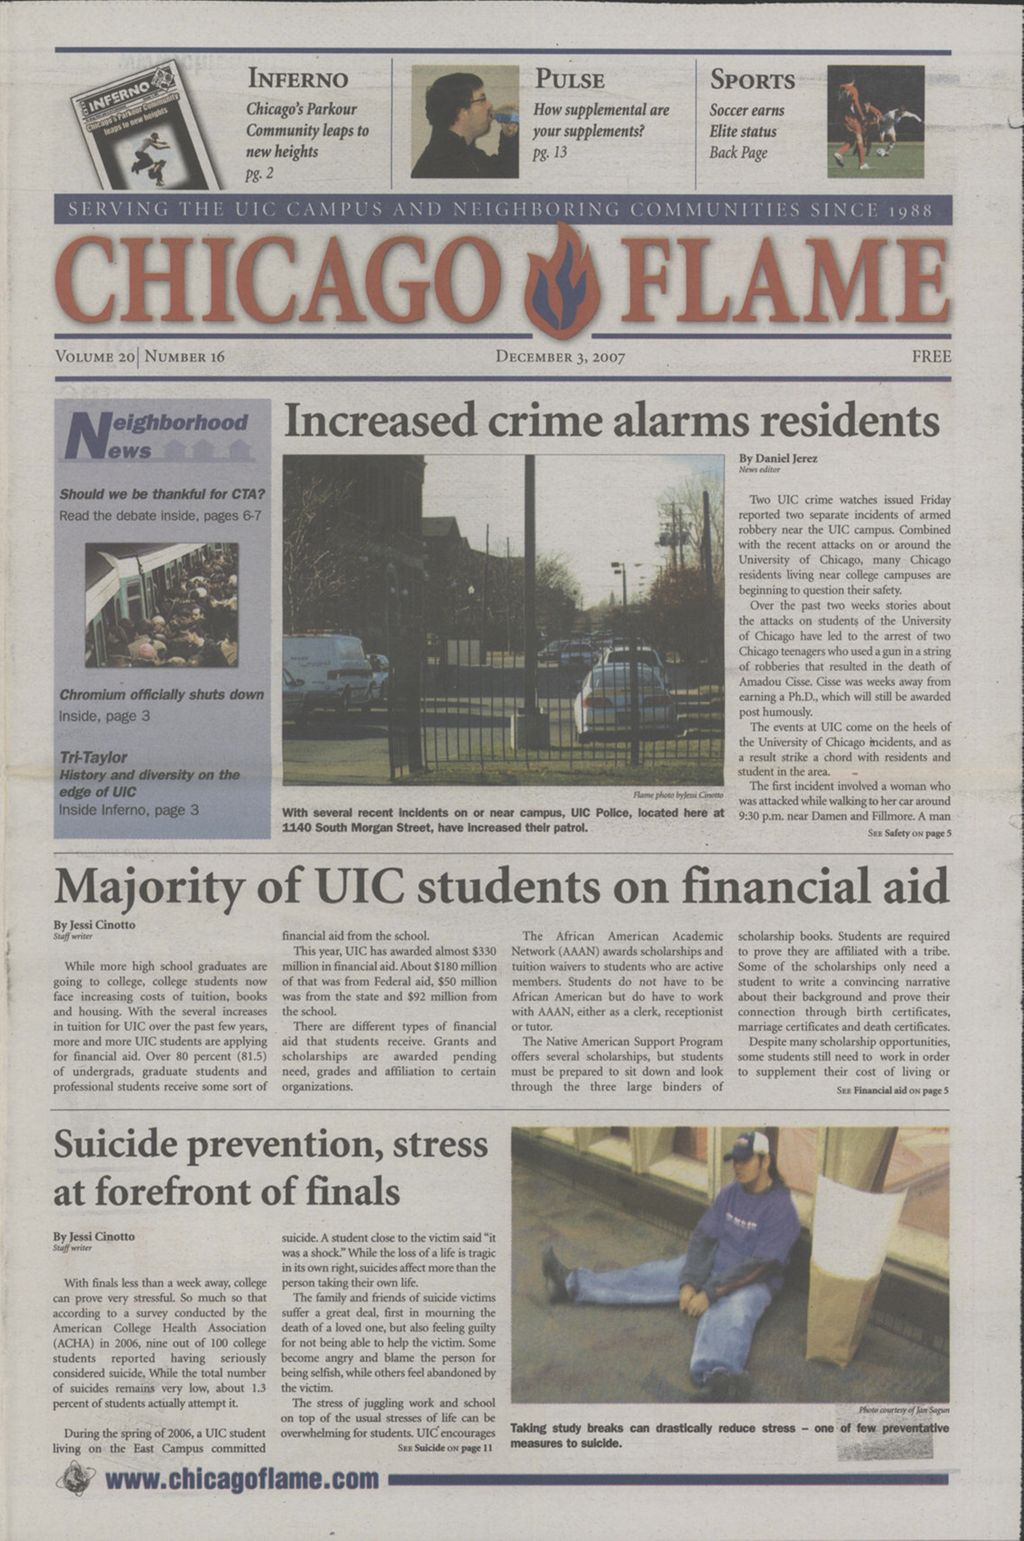 Chicago Flame (December 3, 2007)